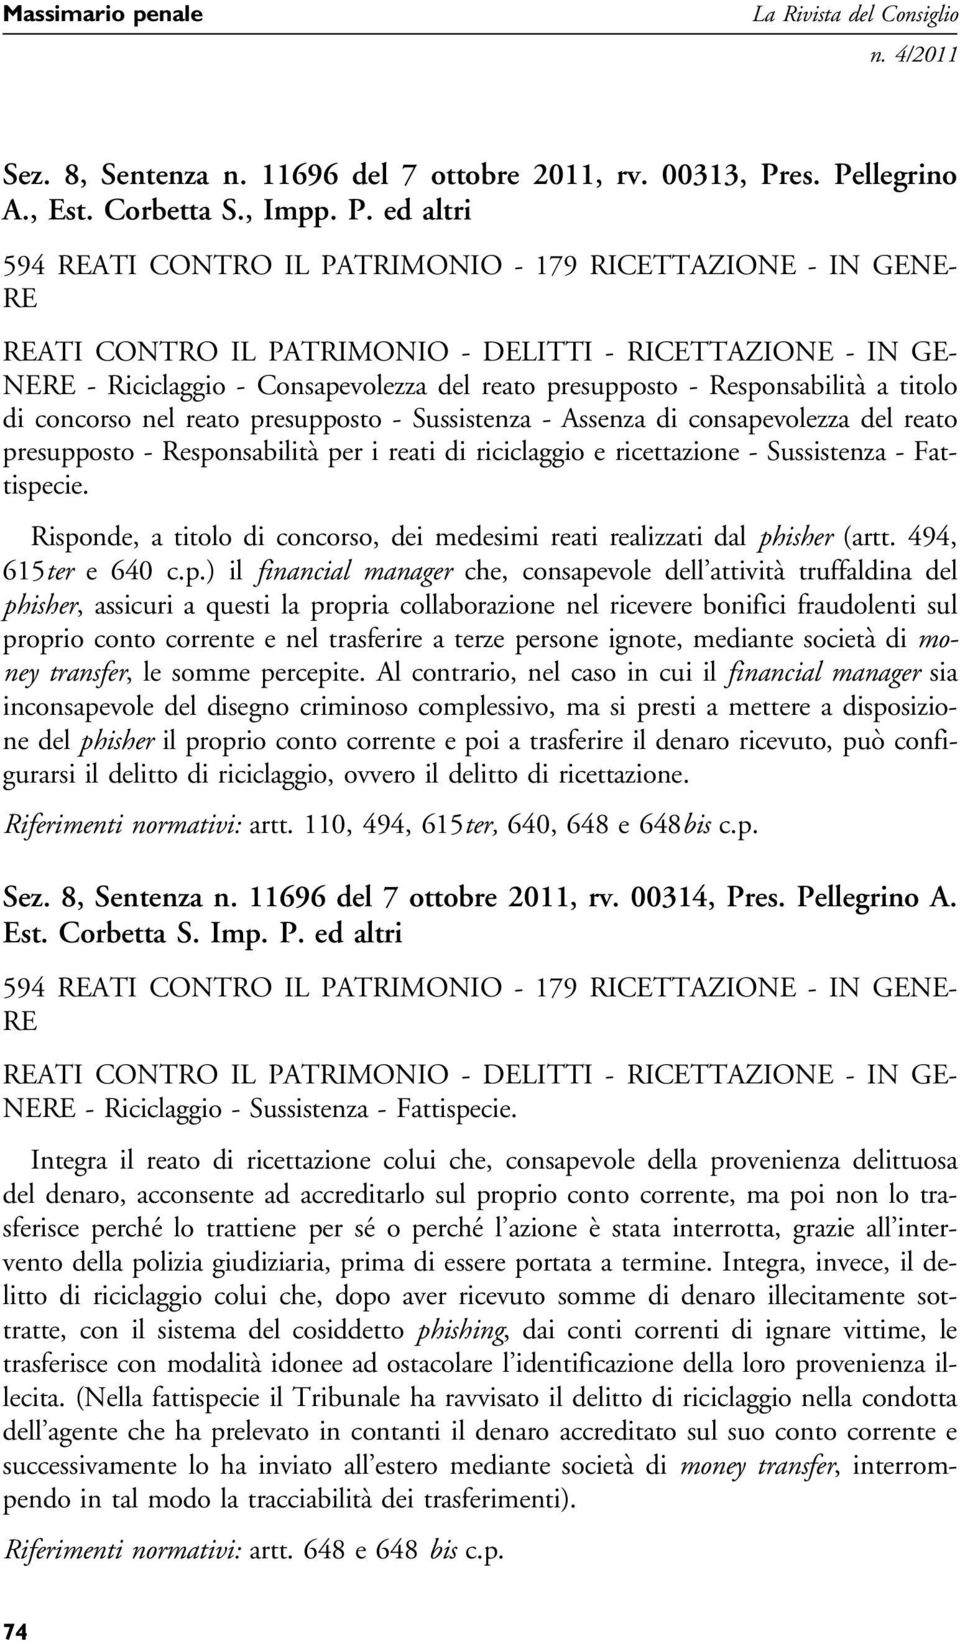 llegrino A., Est. Corbetta S., Impp. P.